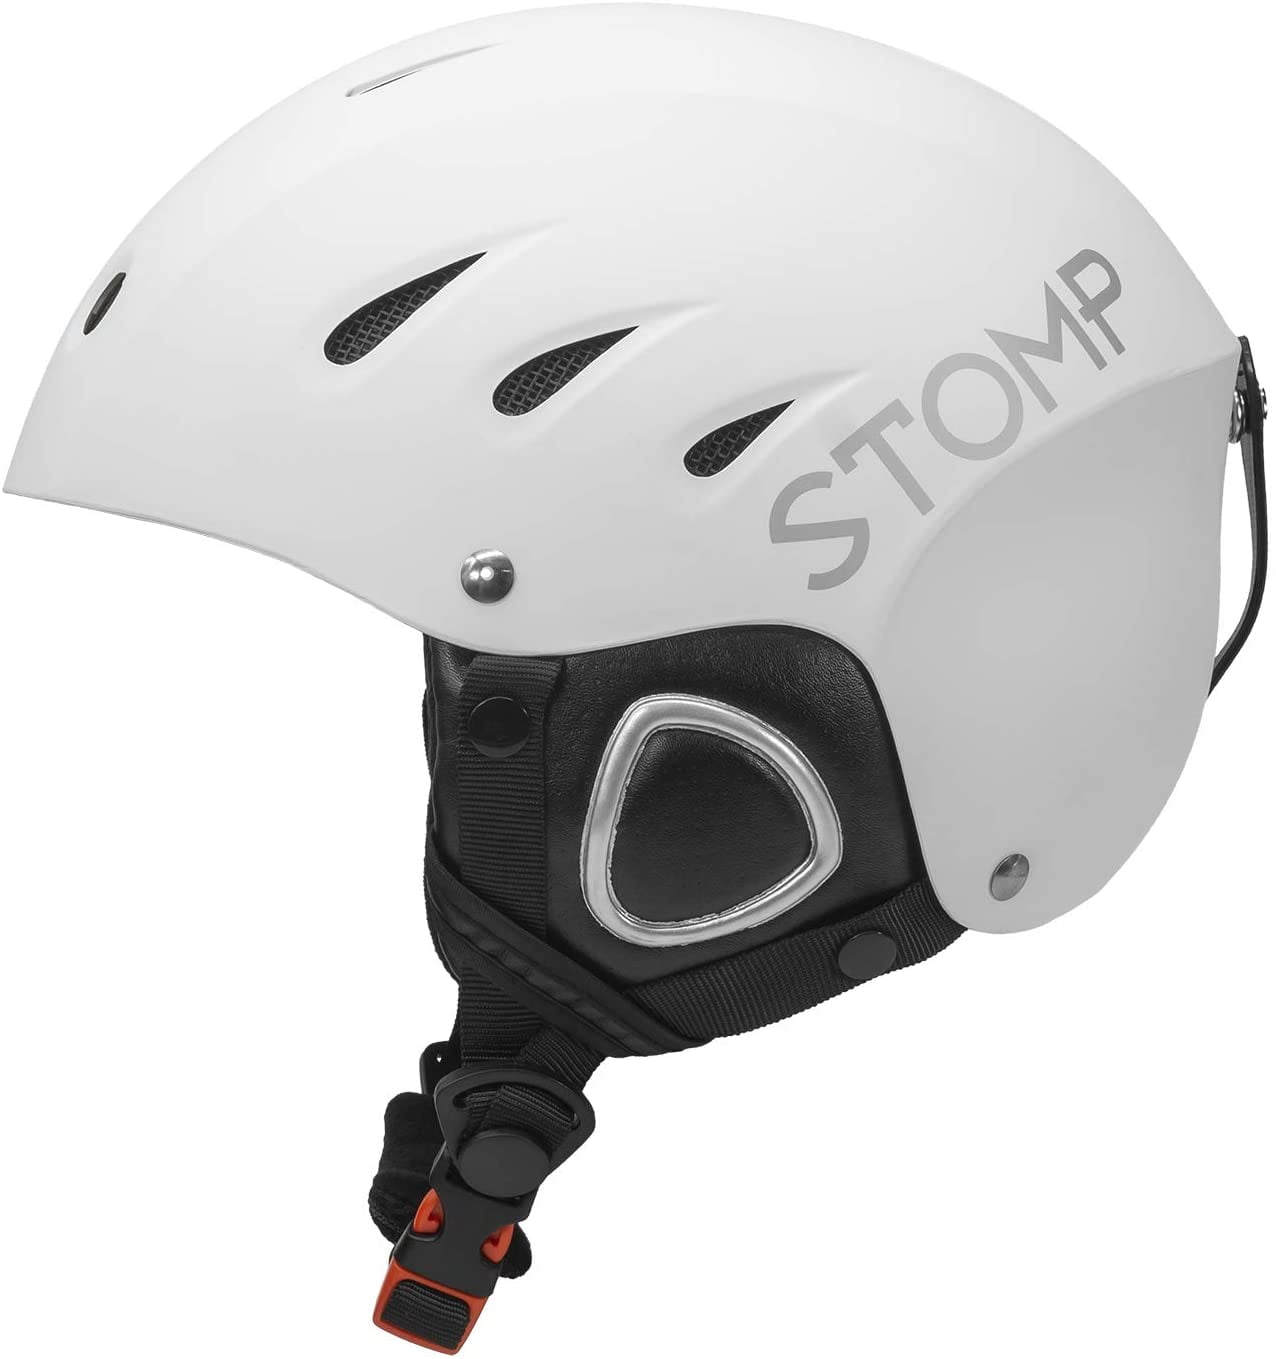 Ski & Snowboarding Snow Sports Helmet Ski Snowboard Helmet Snowboard Helmet Sled Skate Outdoor Recreation Gear for Men,Women & Youth 